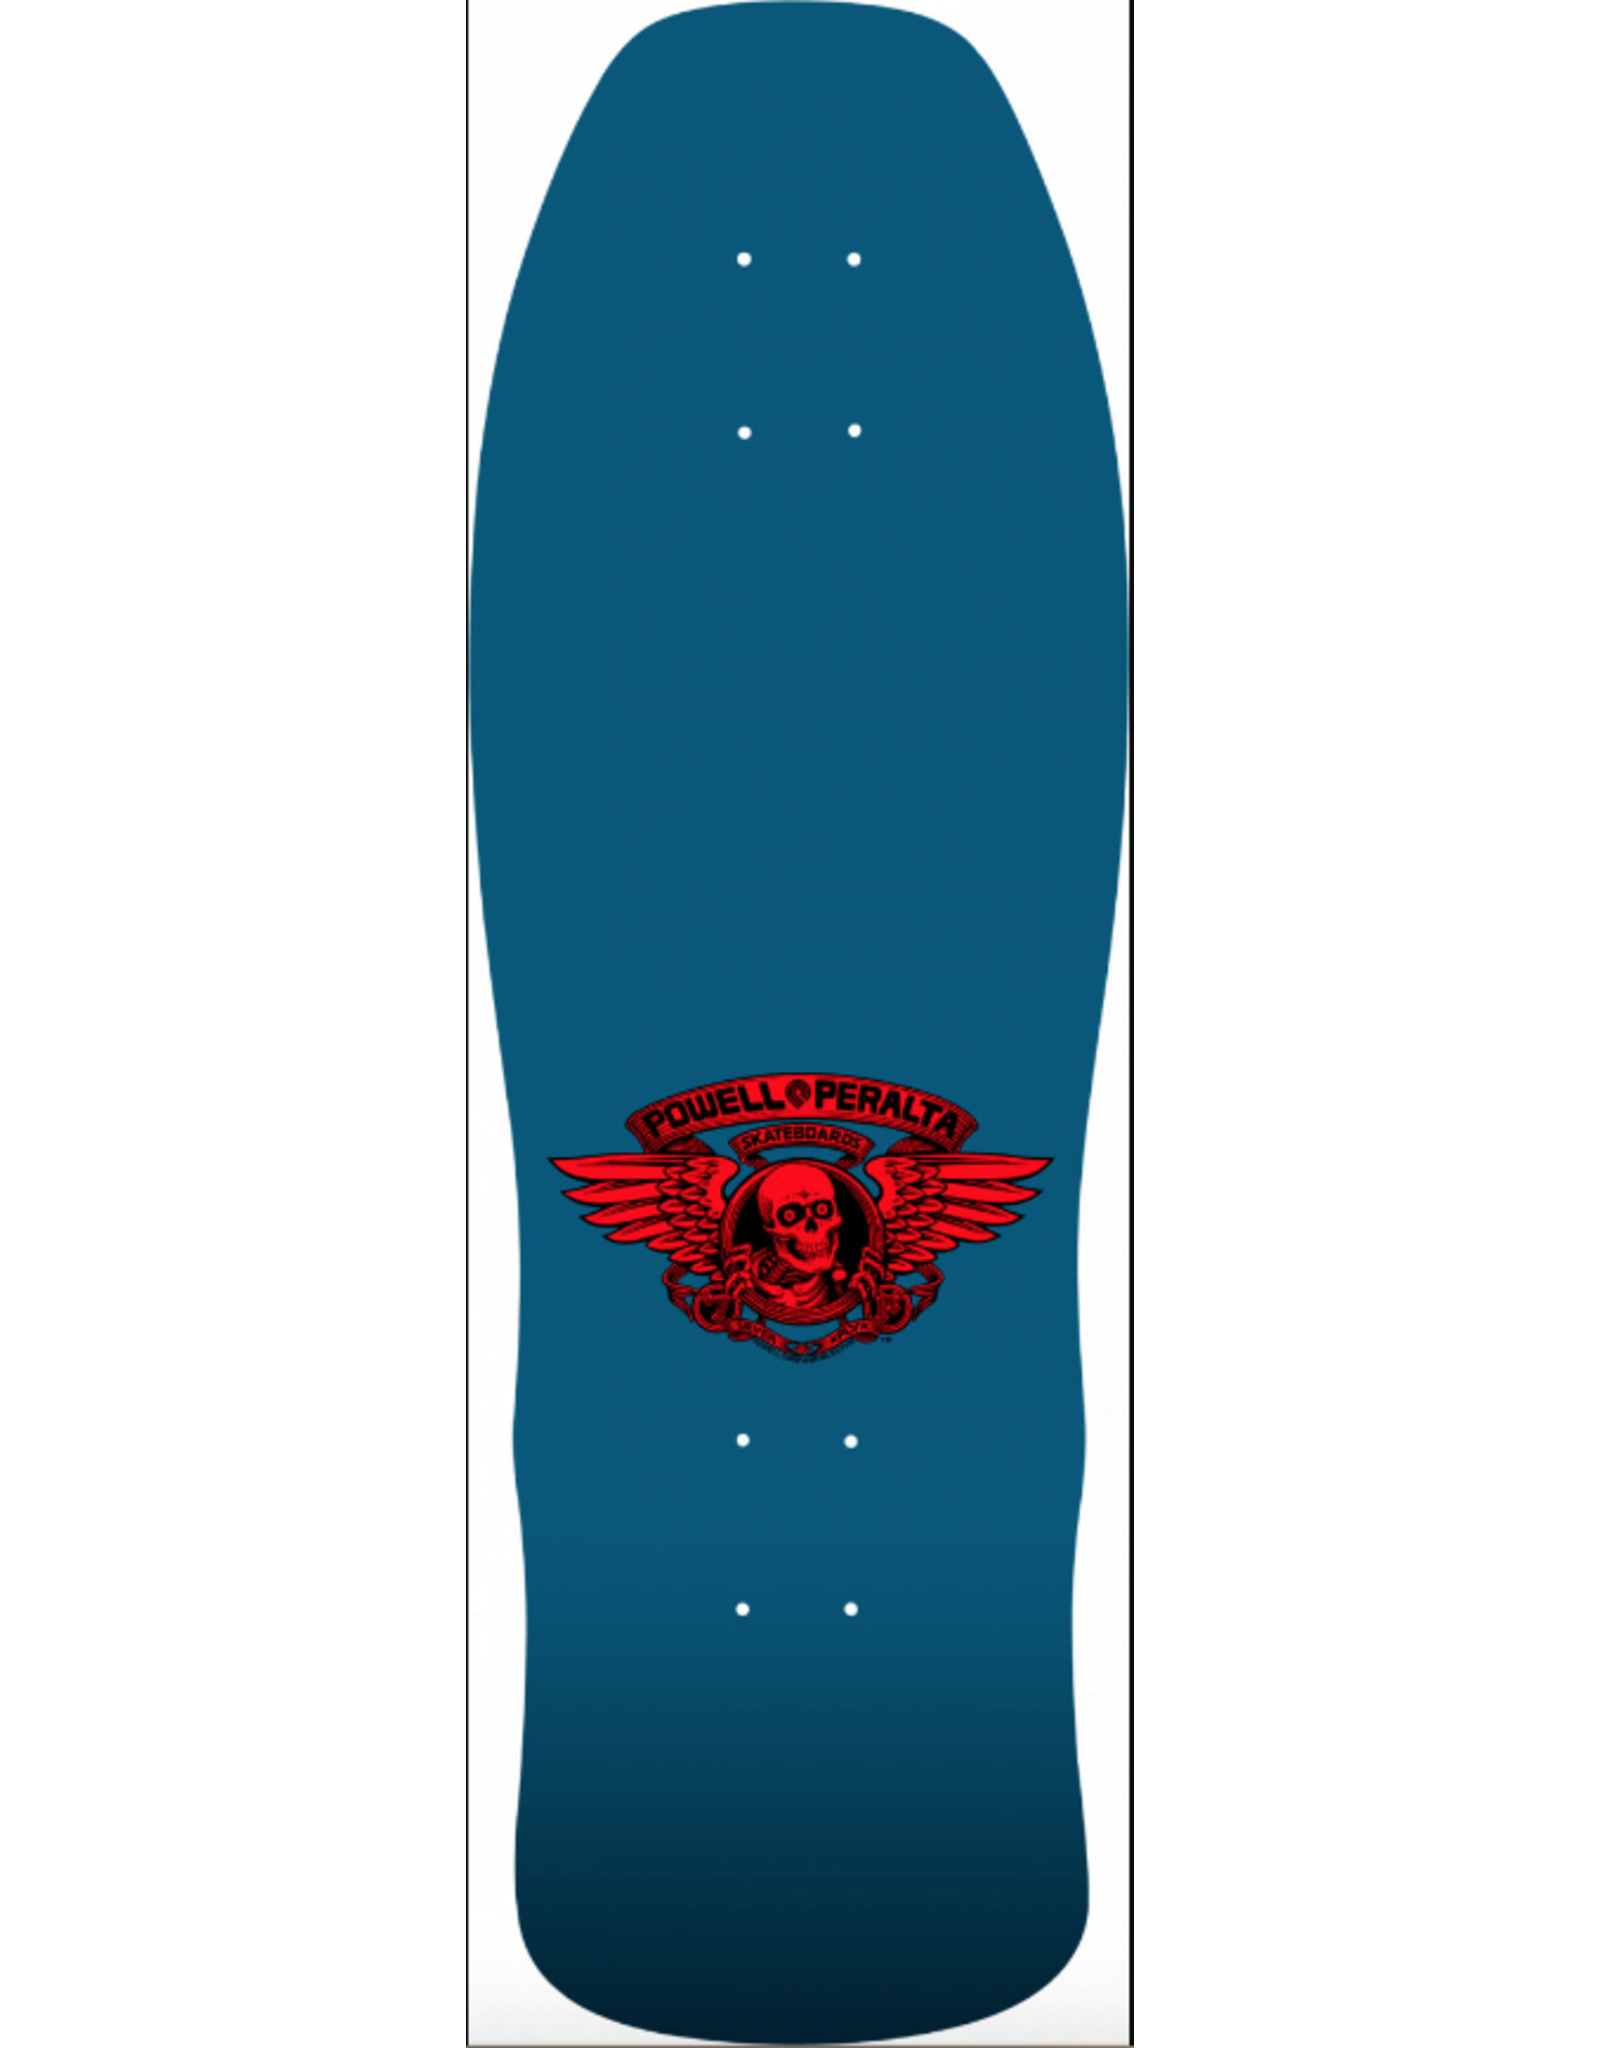 POWELL PERALTA Powell Peralta Welinder Nordic Skull Skateboard Deck Blue - 9.625 x 29.75